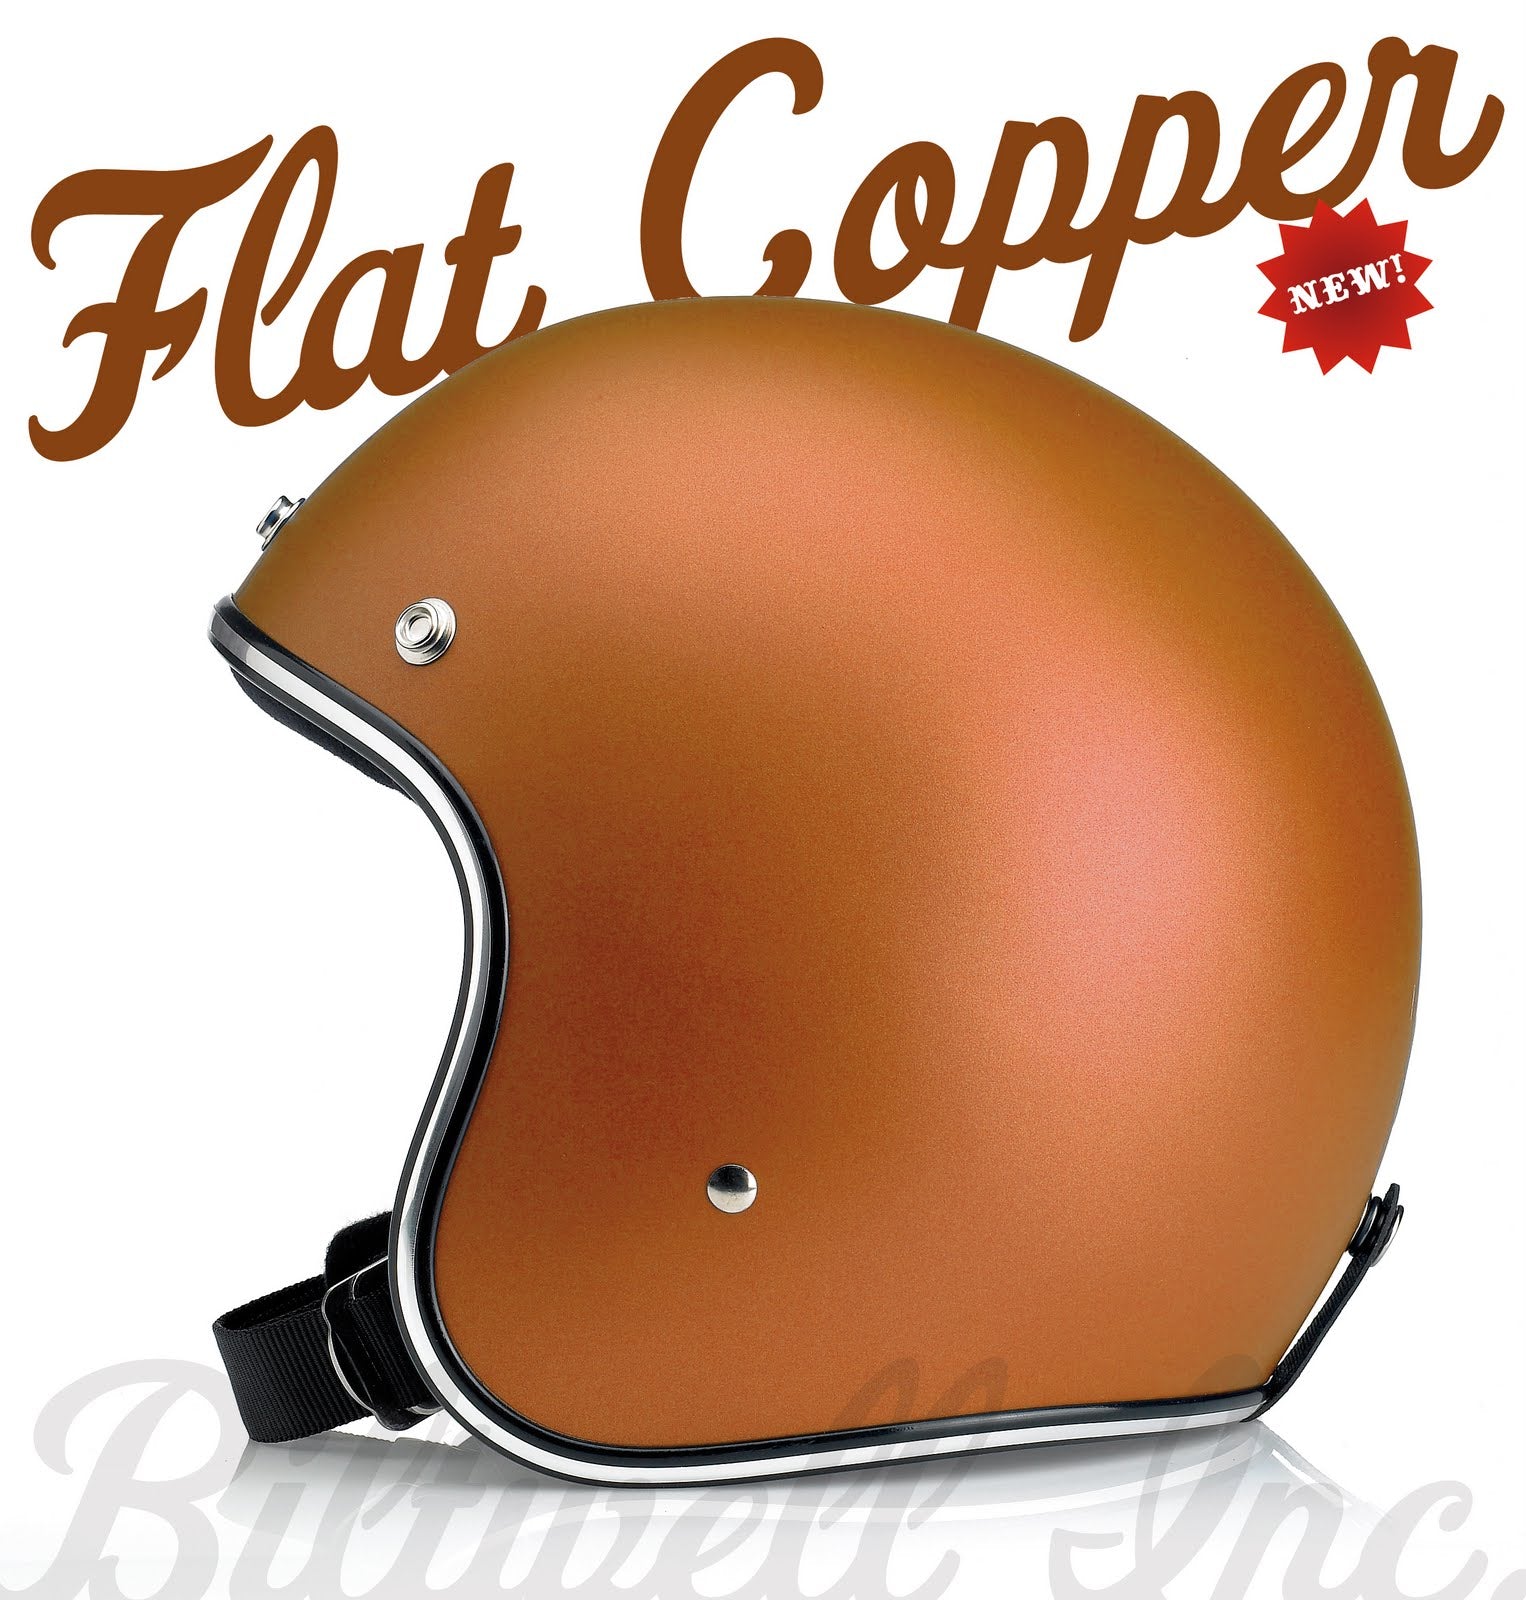 New! Flat Copper